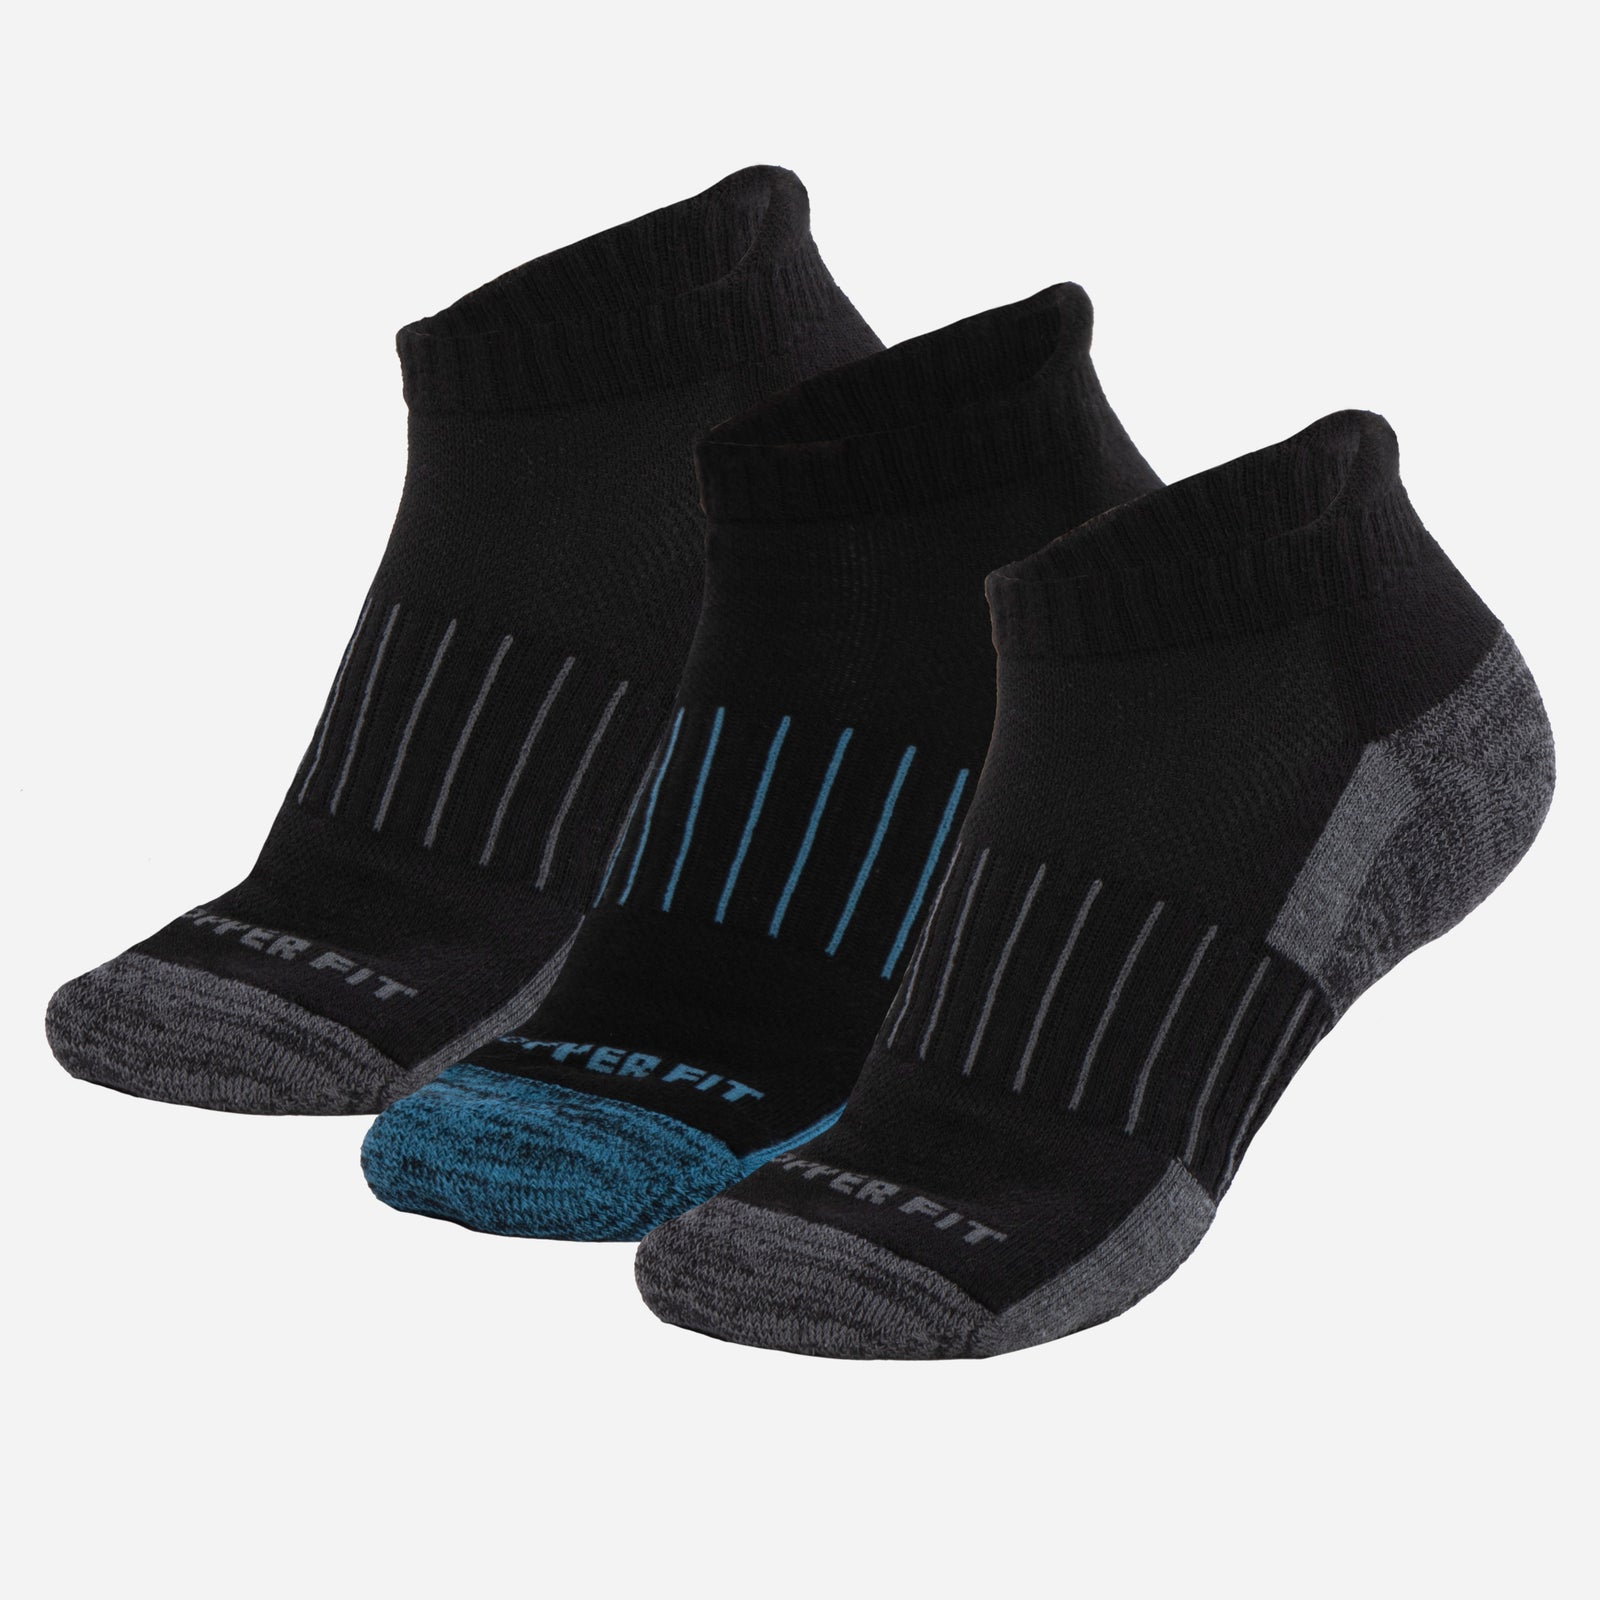 Tommie Copper Sport Compression Low Cut Socks, 3-Pack, Black, Small/Medium